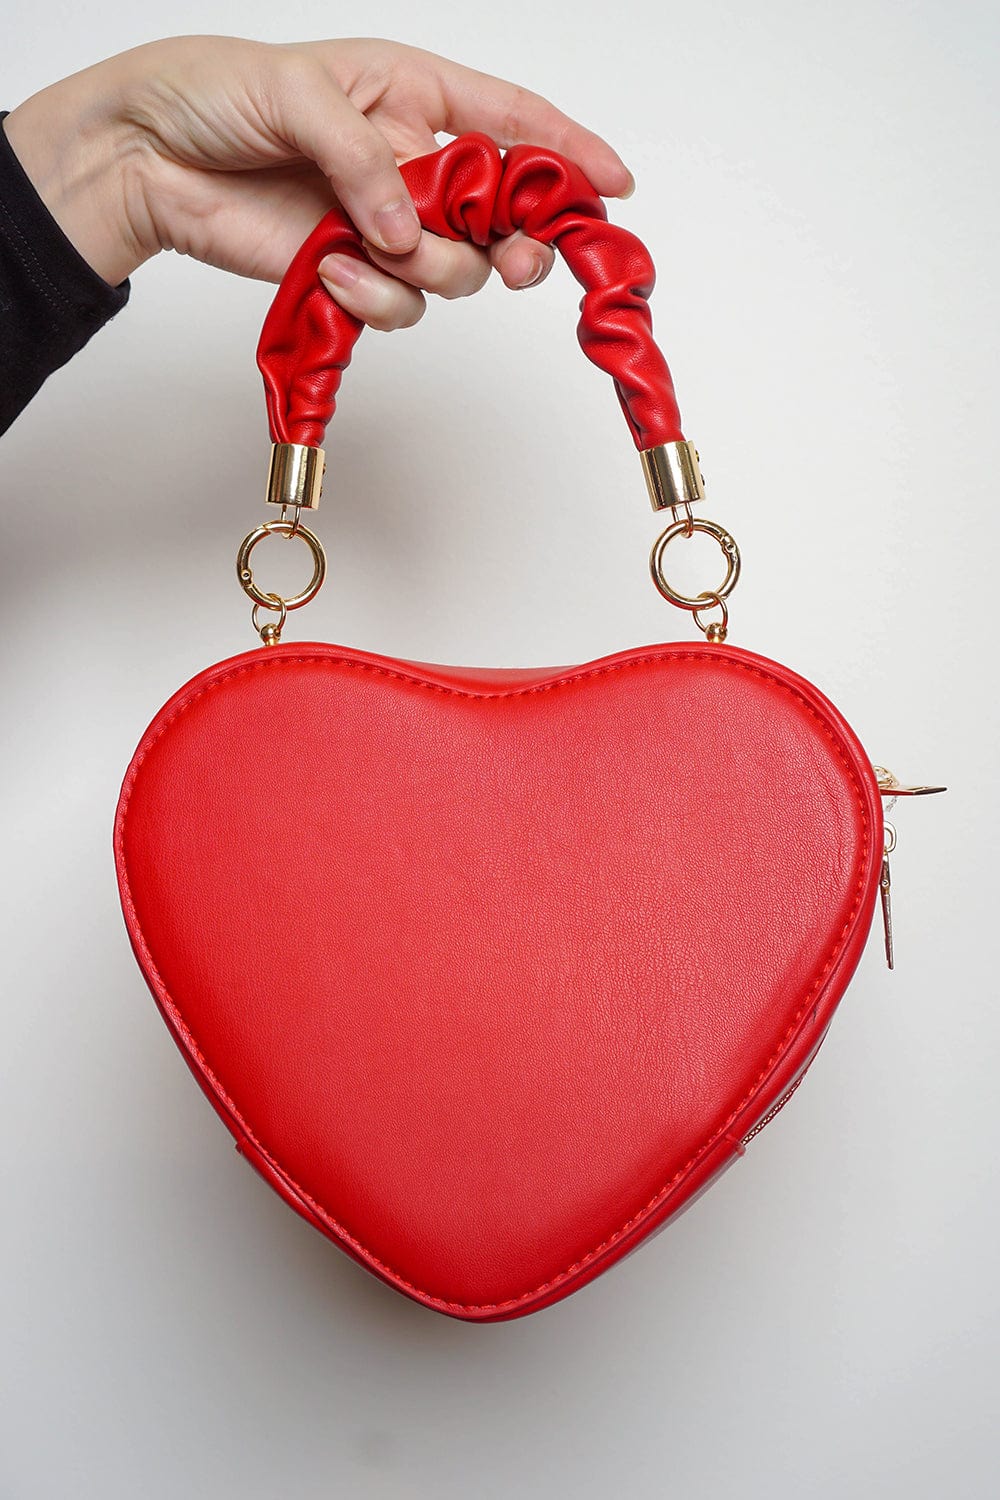 HANDBAGS Red Heart Shaped Handbag - Chloe Dao